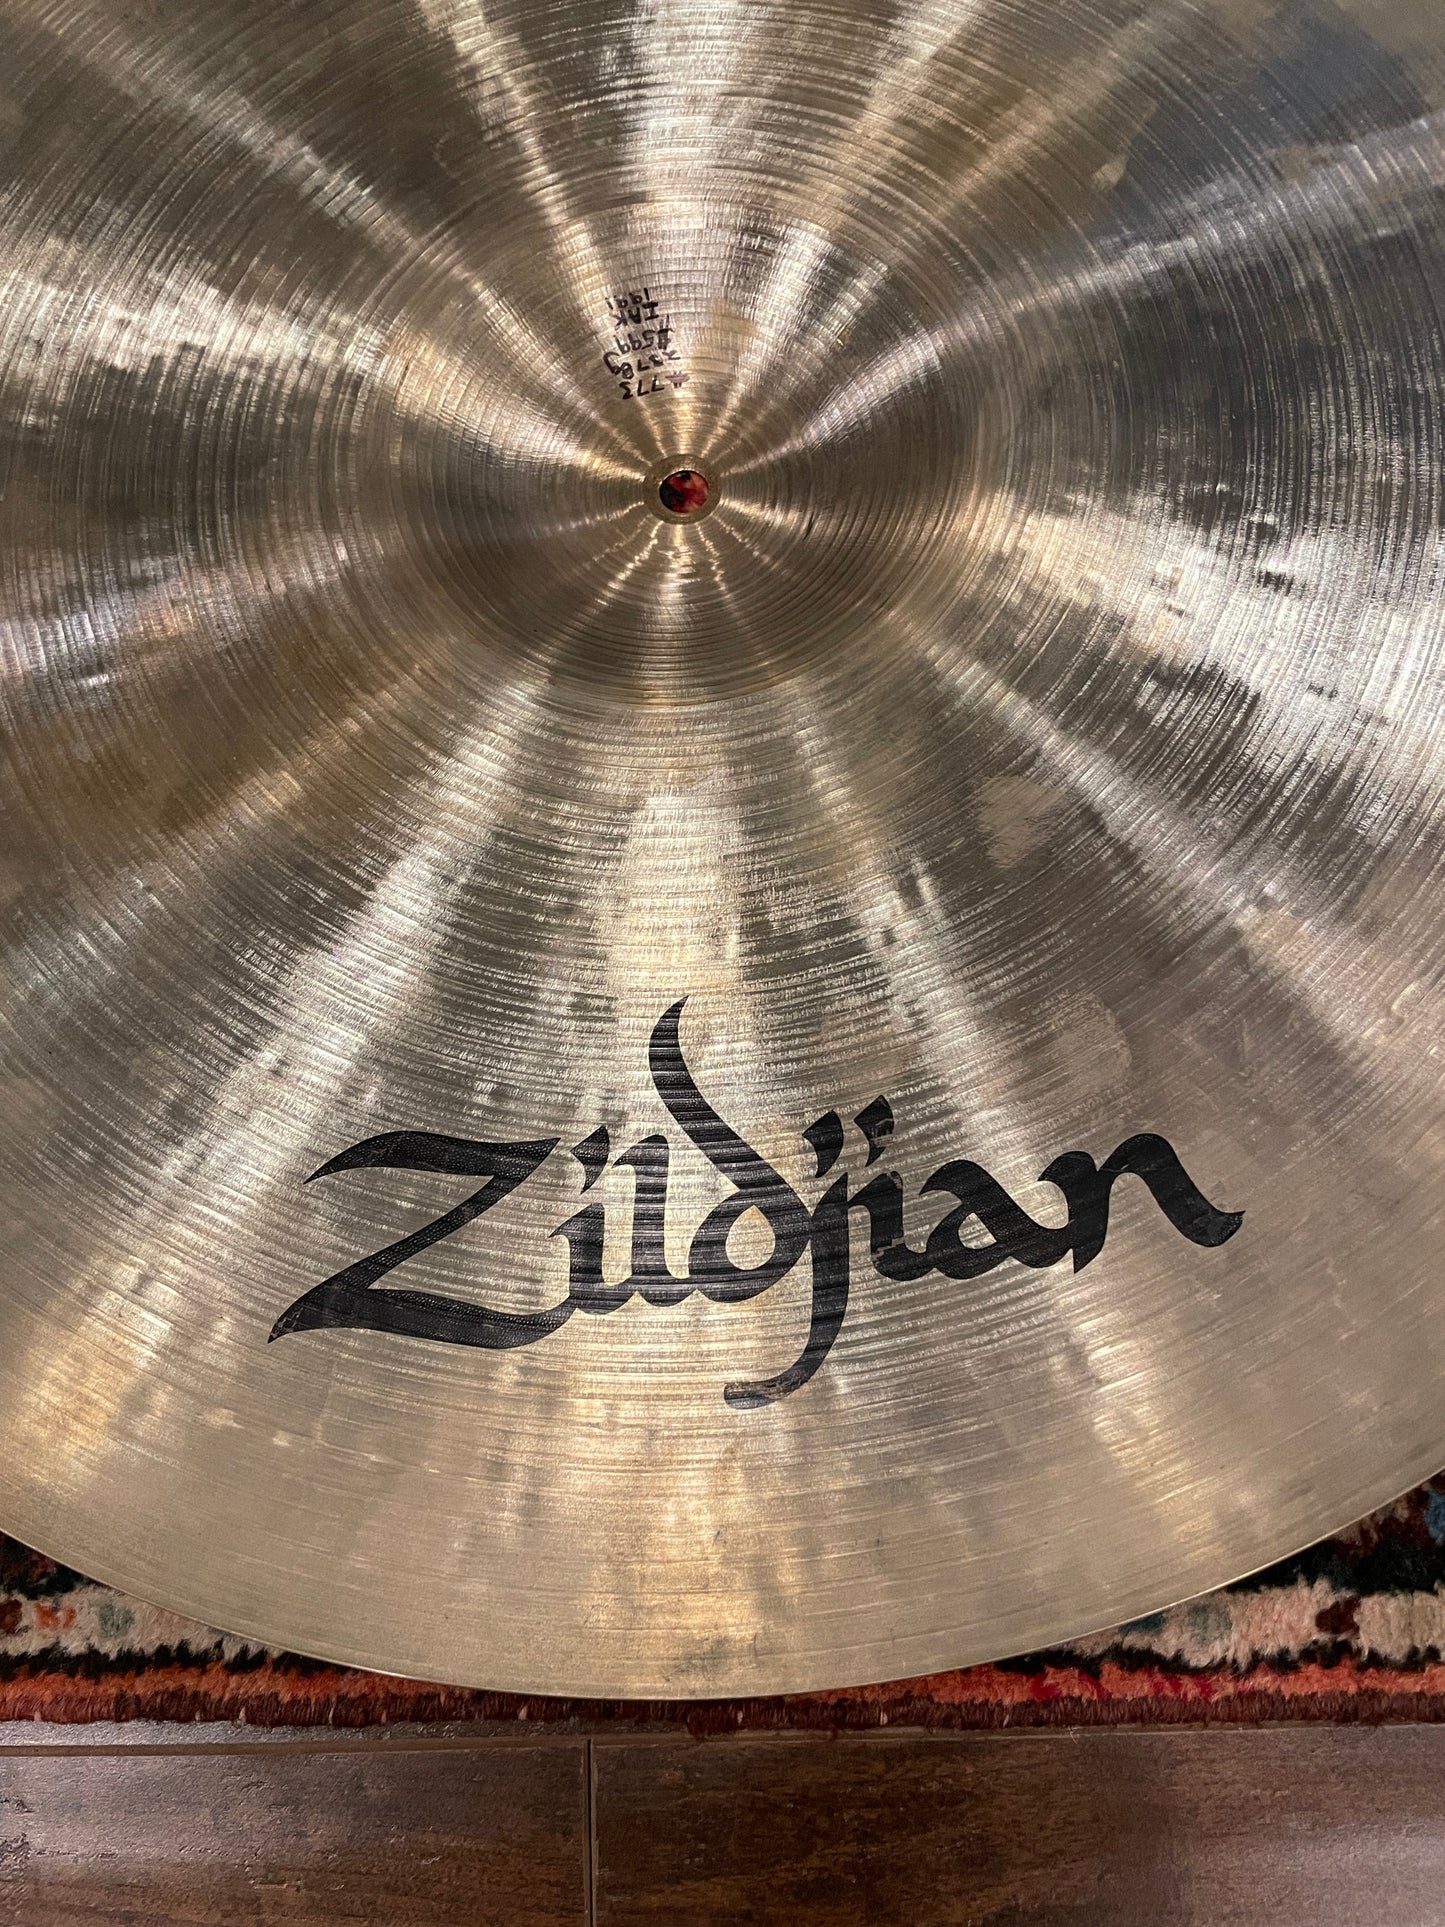 22" Zildjian K Pre-Aged Dry Light Ride Cymbal IAK PADLR 2378g #773